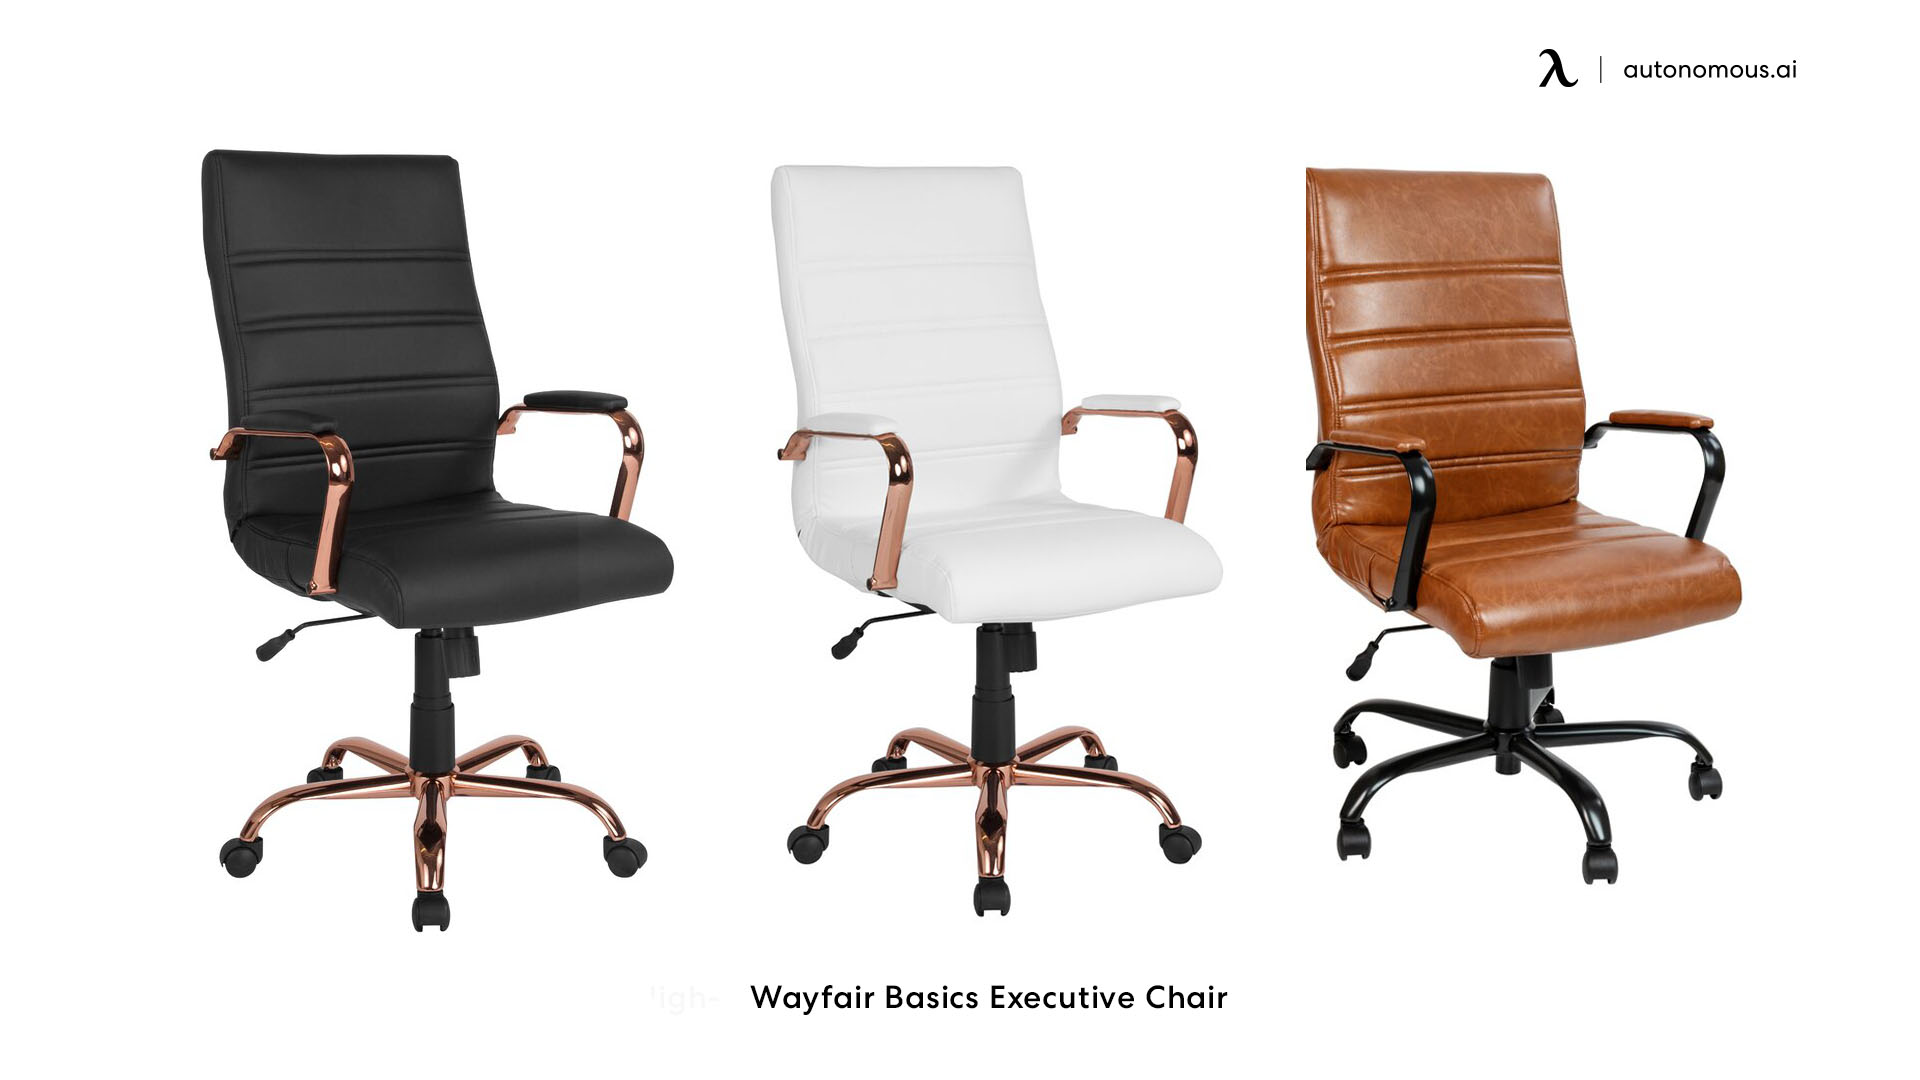 Wayfair Basics colored desk chairs